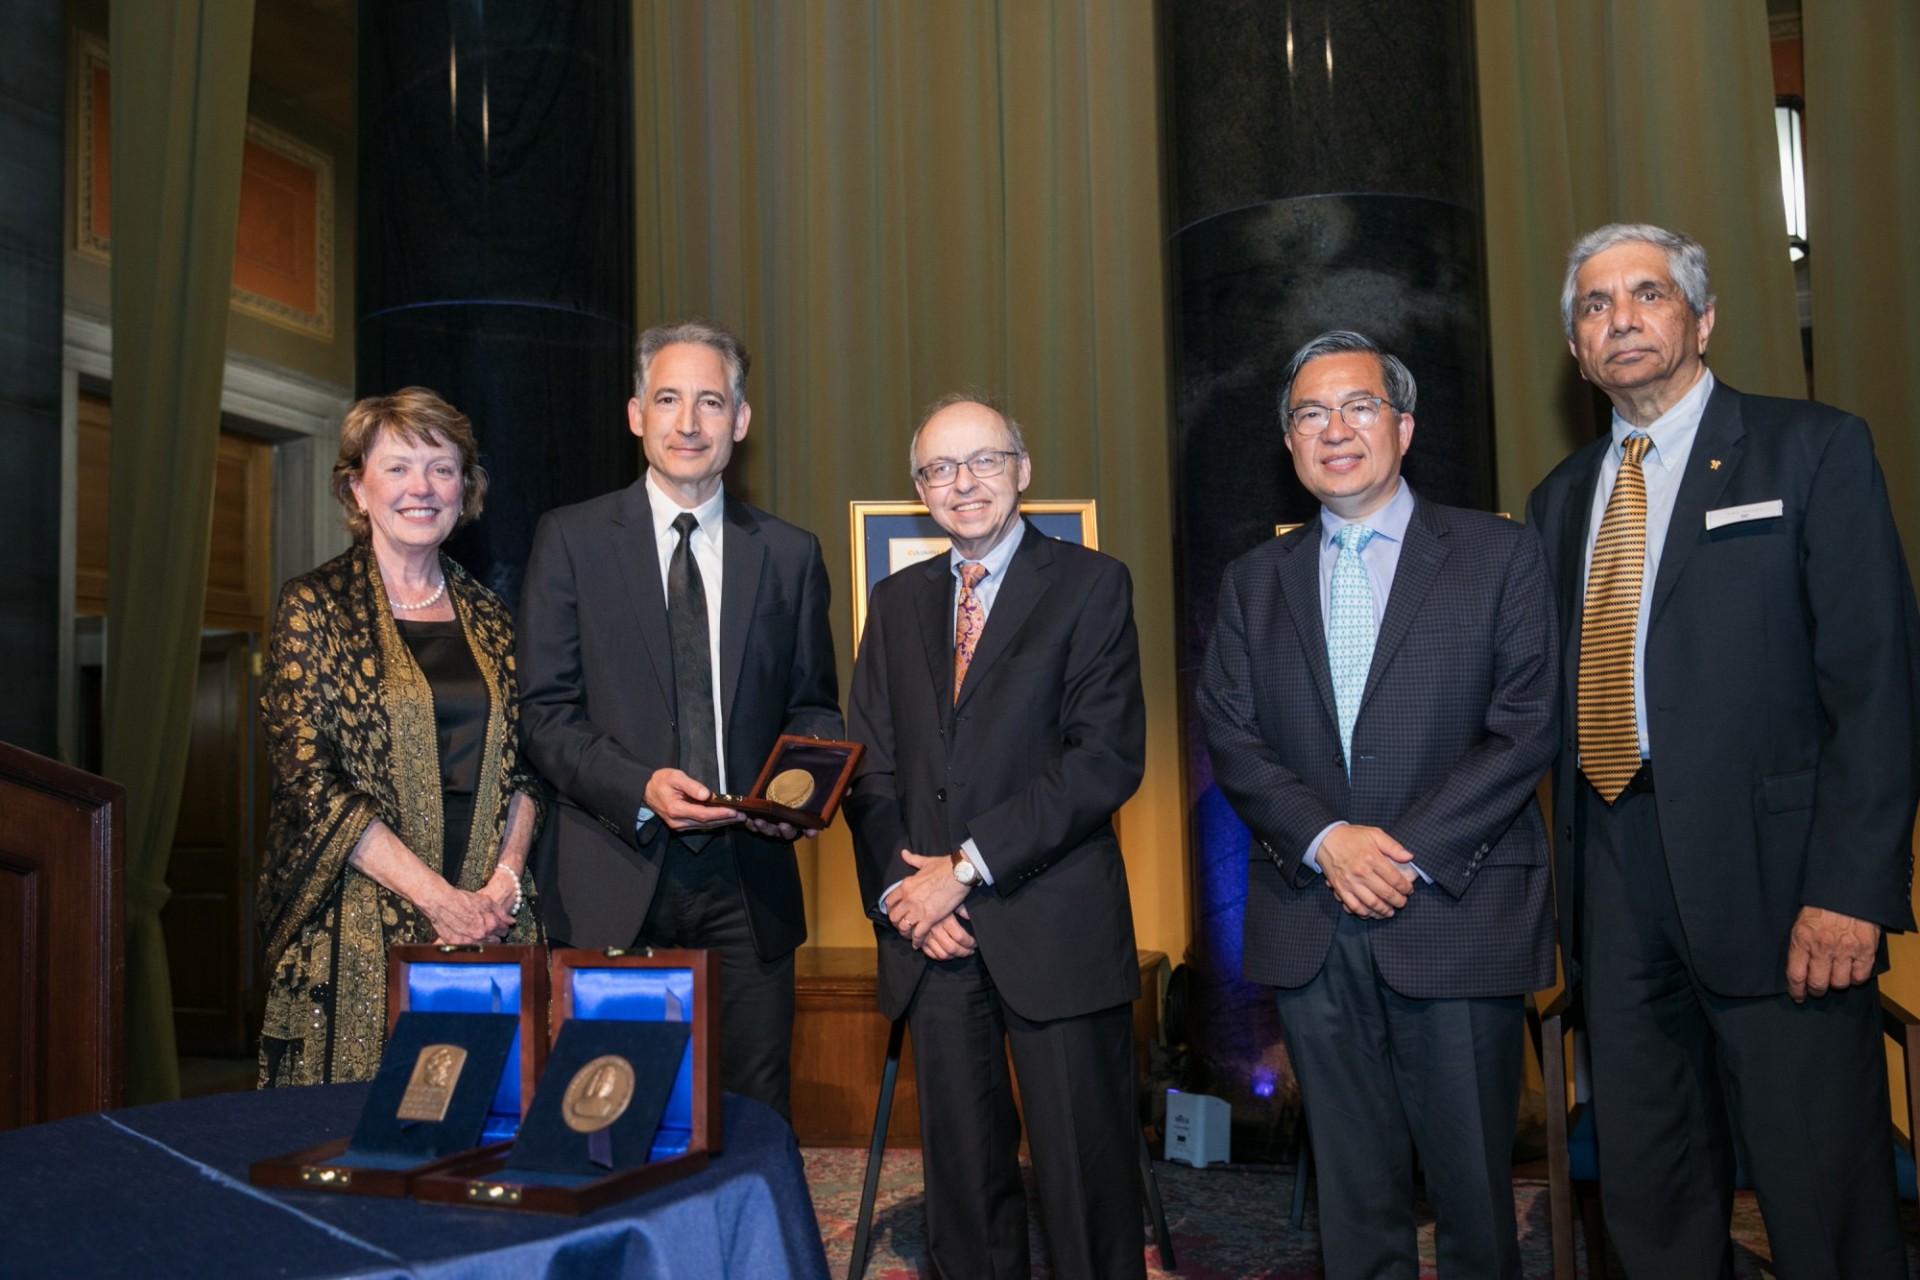 Professor Brian Greene Awarded the Michael Pupin Medal